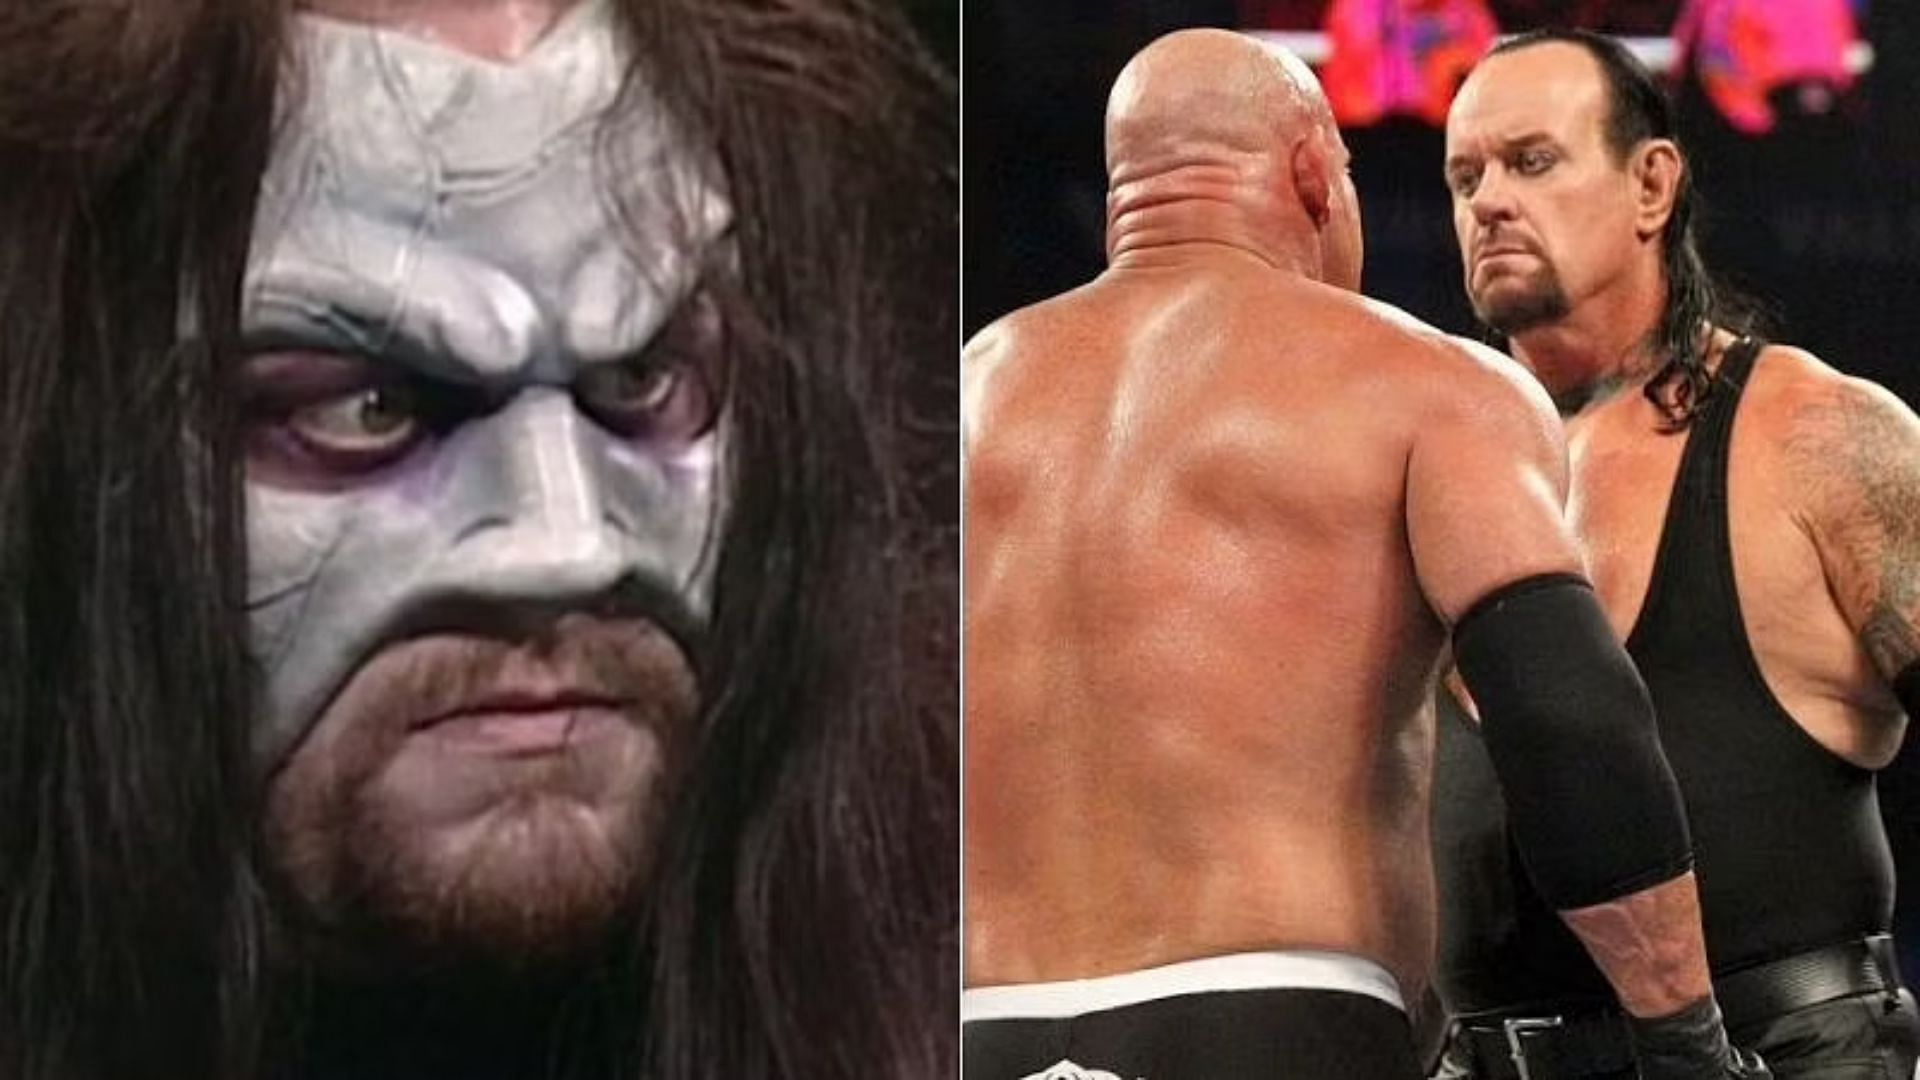 The Undertaker faced Goldberg at WWE Super ShowDown 2019